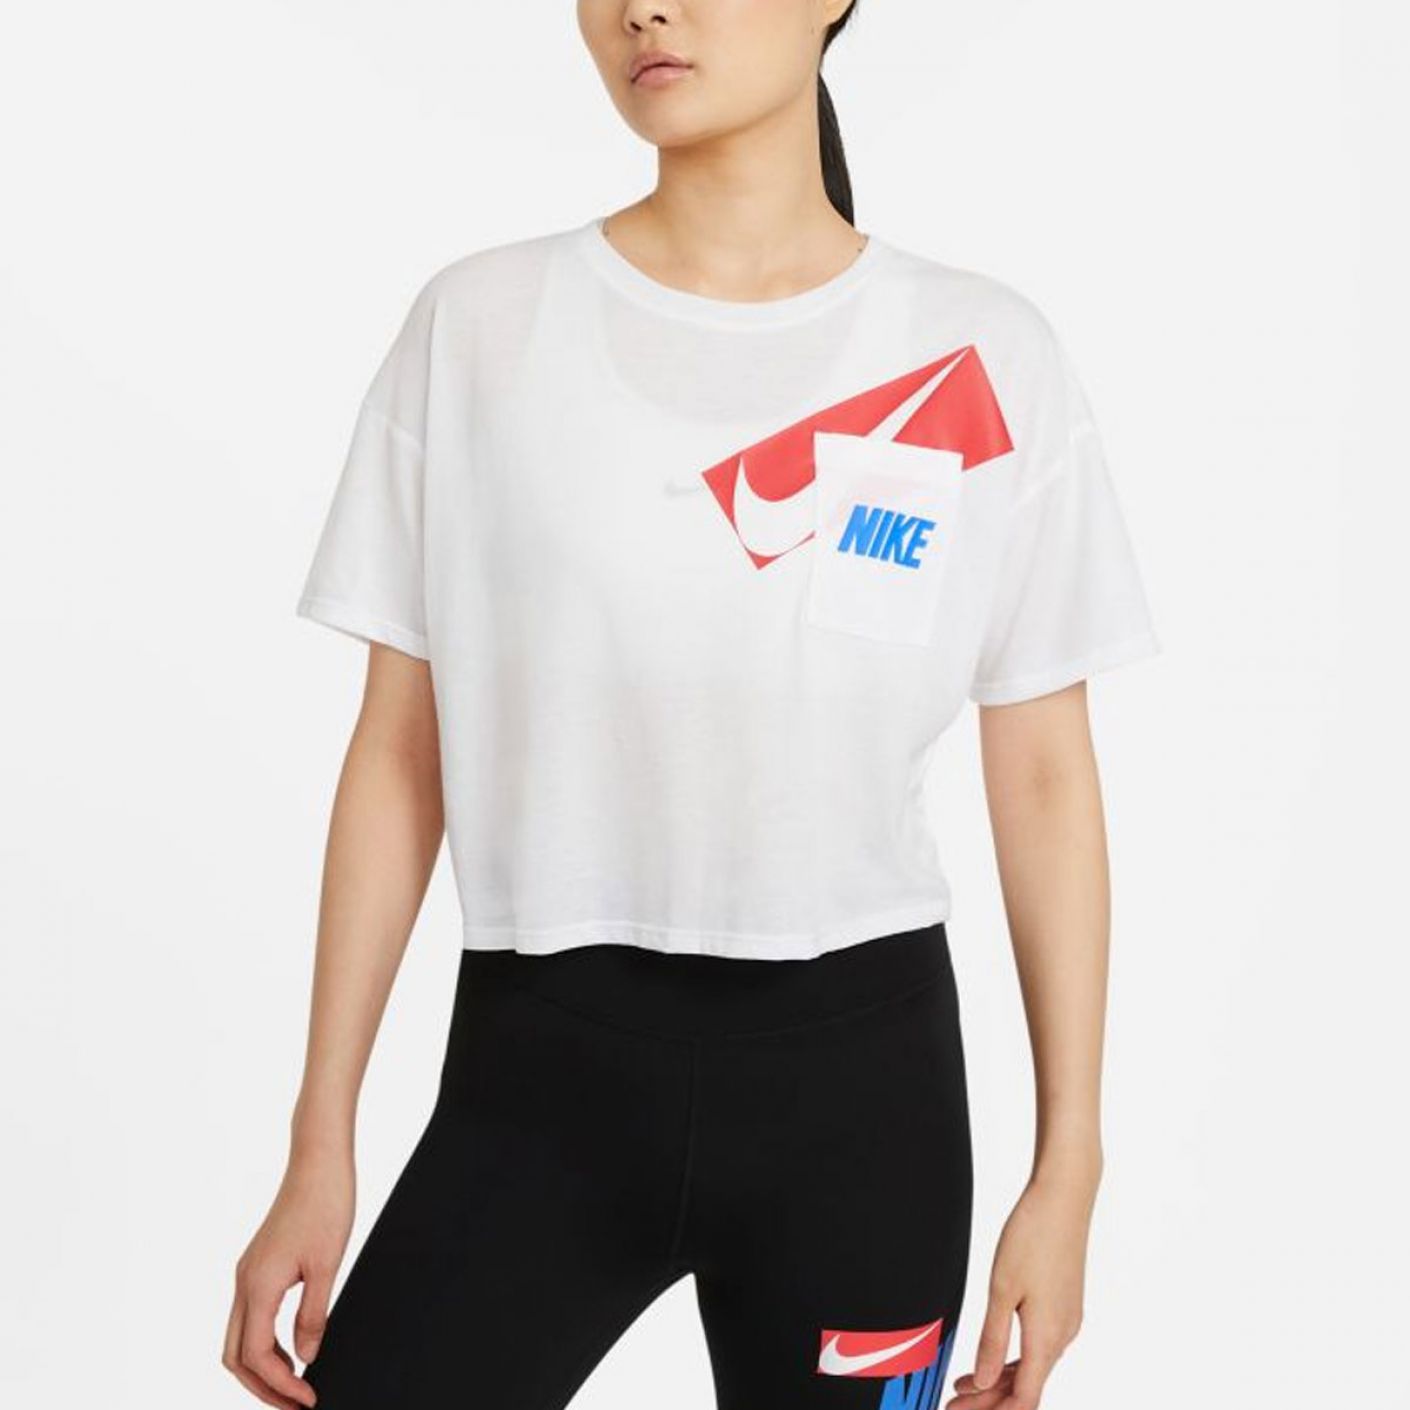 Nike Women's Dri-Fit White T-shirt